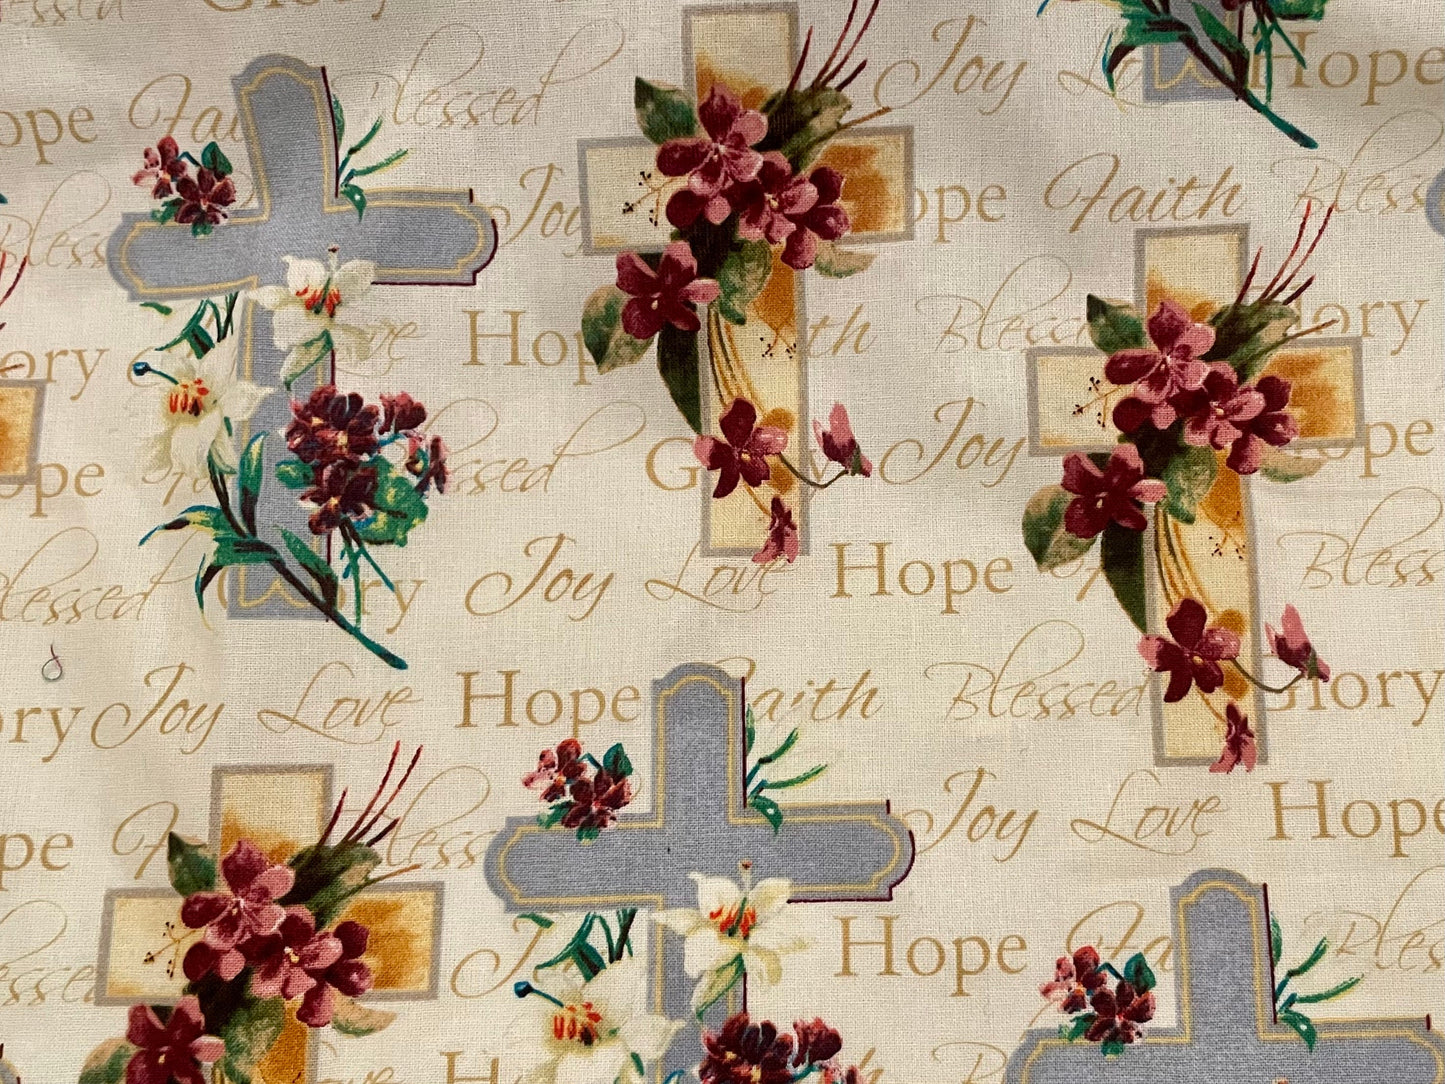 Beautiful Christian Hope Crosses and Flowers blanket